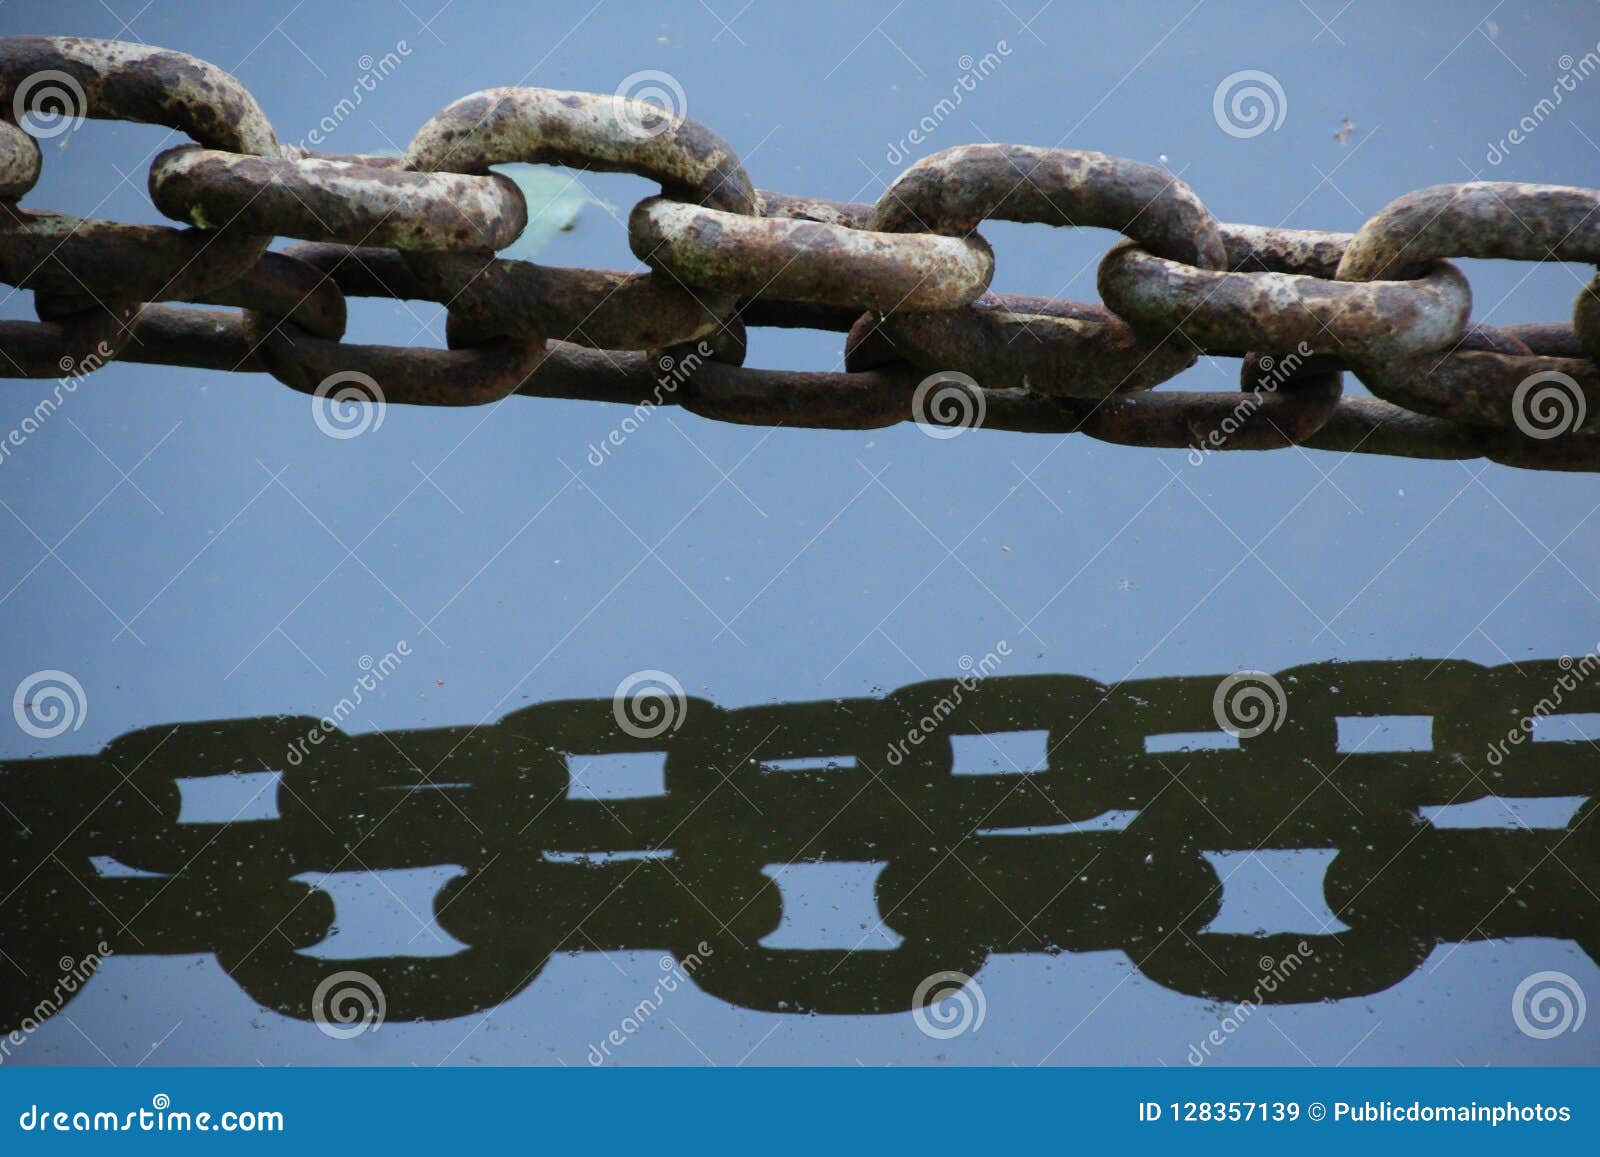 Chain support. Цепь. Цепочка металлическая. Железная цепь. Цепь металлическая для ограждения.